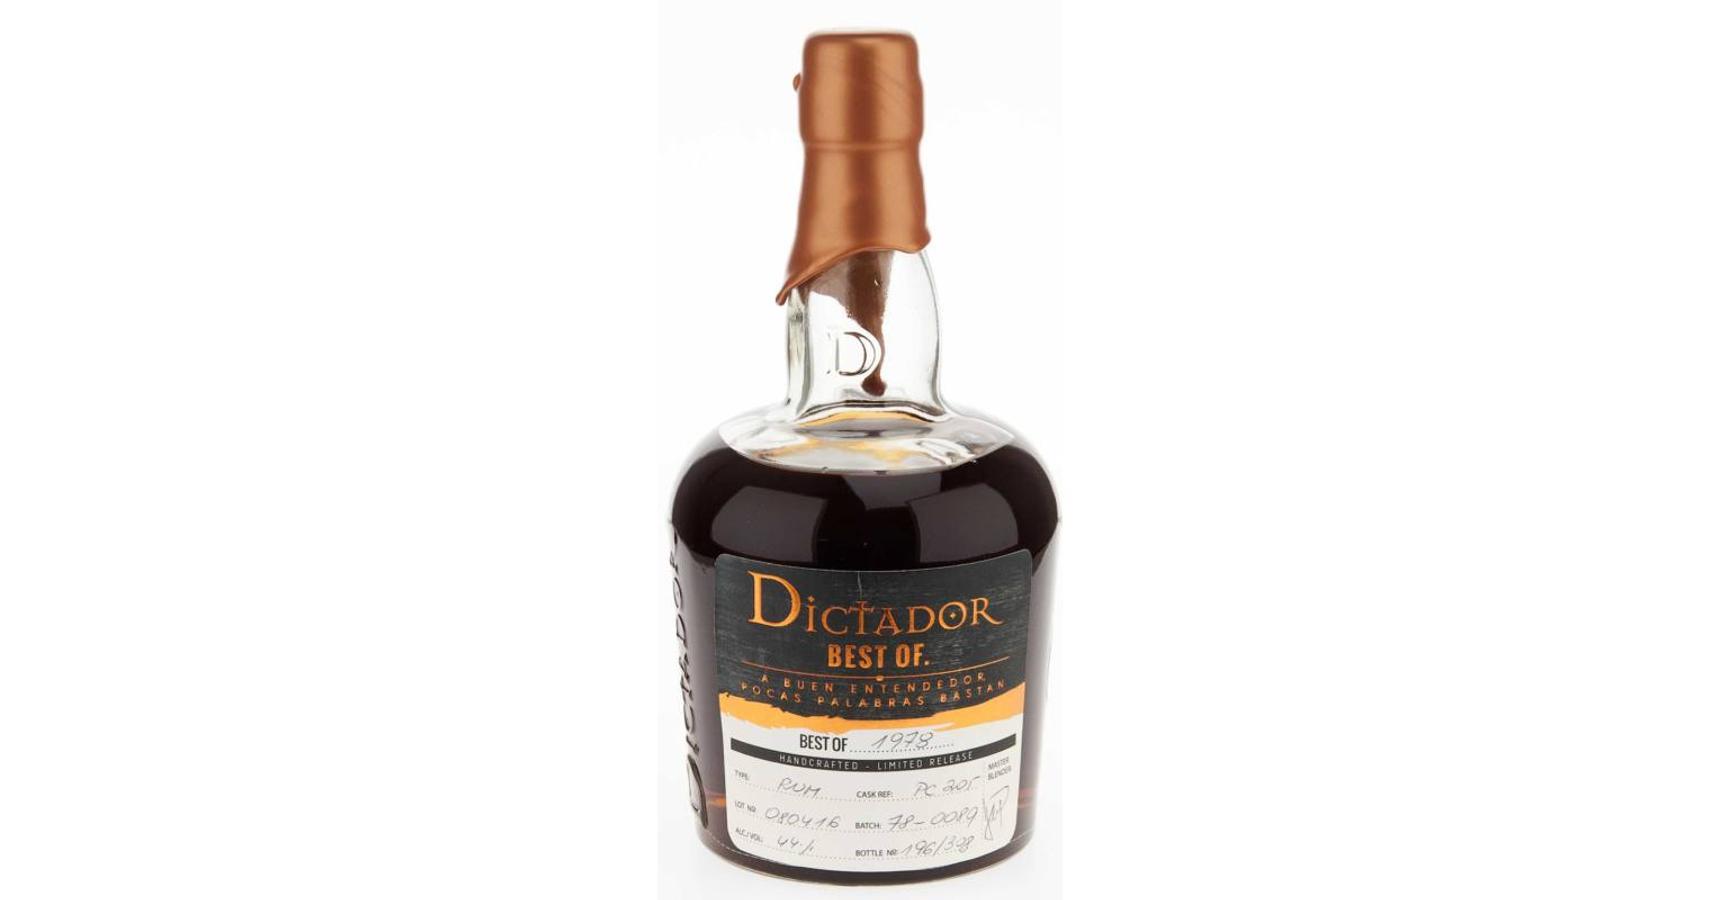 Dictador The Best of rum 1978 0,7L 44% - Rumshop